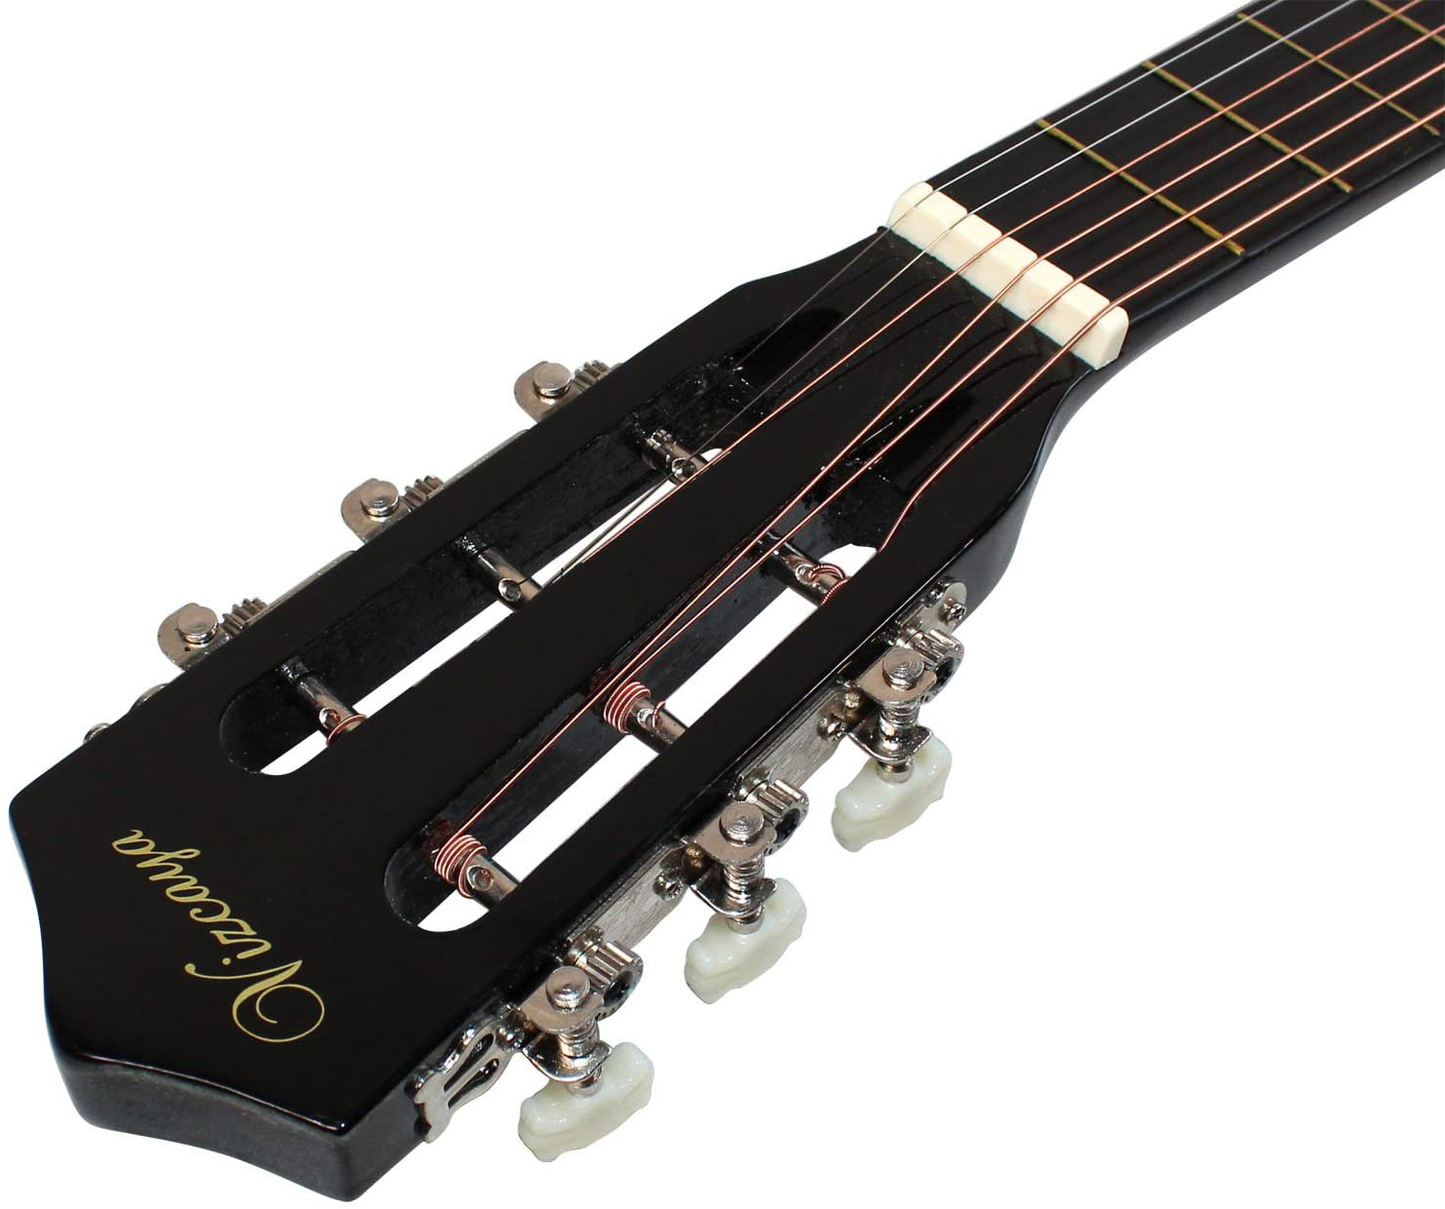 YMC 38" Black Beginner Acoustic Guitar Starter Package Student Guitar with Gig Bag,Strap, 3 thickness 9 picks,2 Pickguards,Pick Holder, Extra Strings, Electronic Tuner -Black